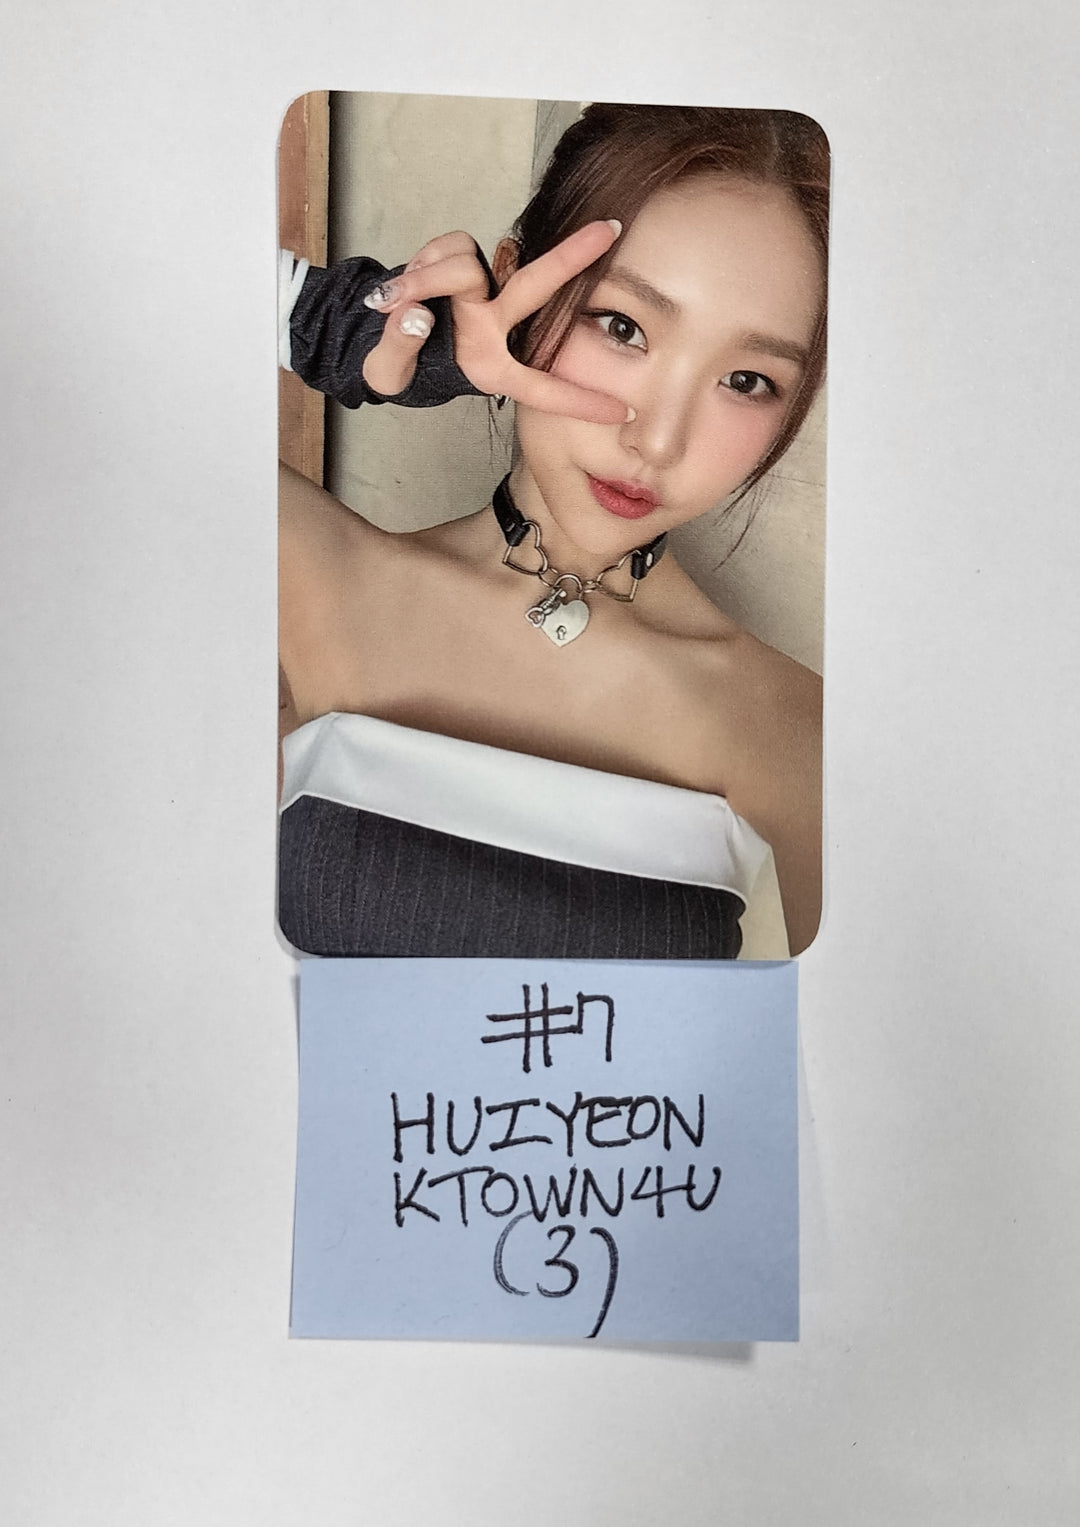 Lightum 'Into The Light' - Ktown4U 예약판매 혜택 포토카드